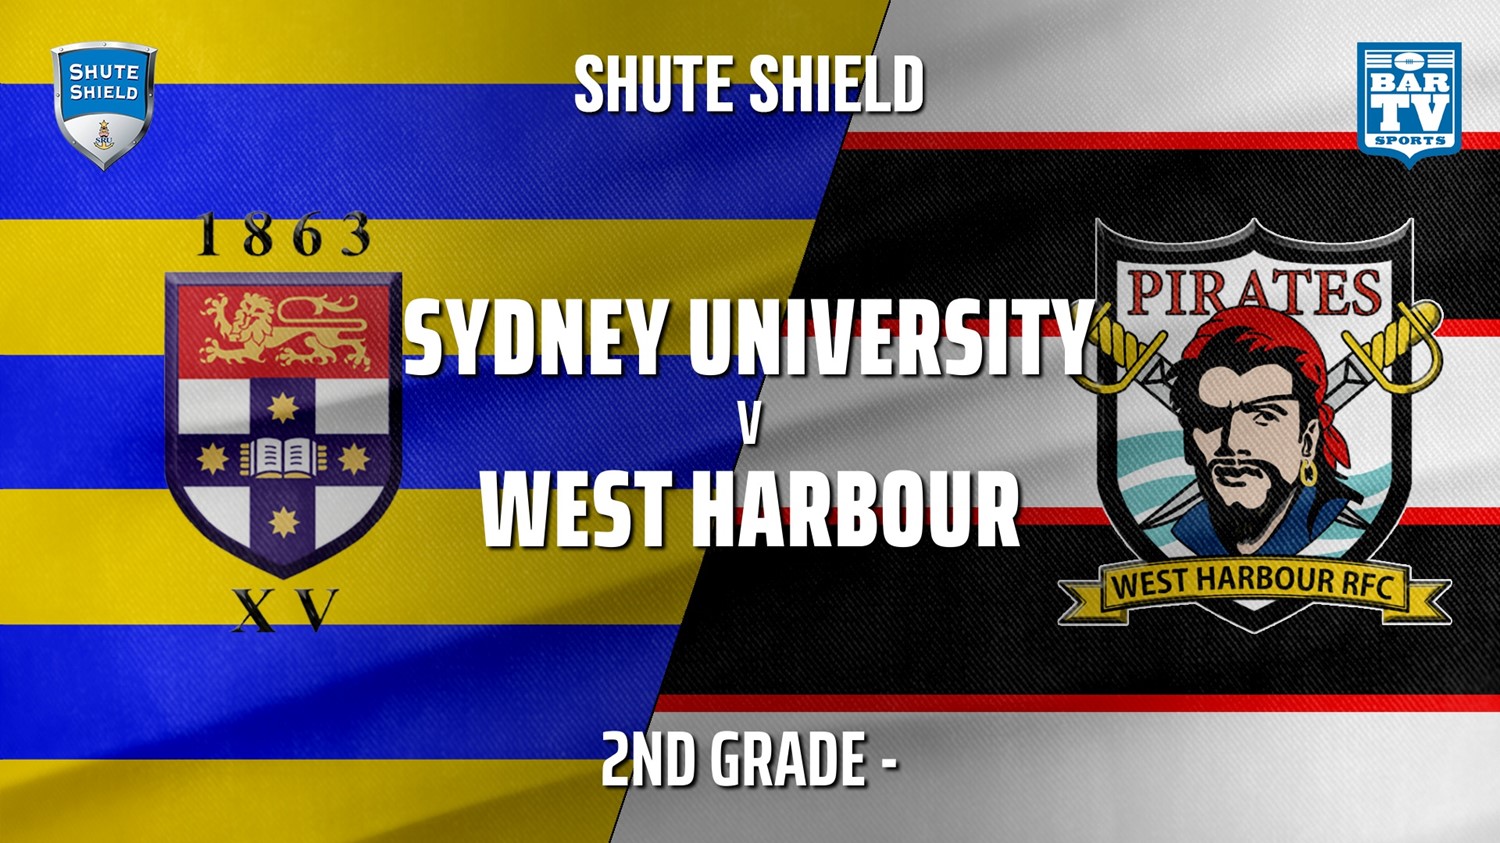 Shute Shield 2nd Grade - Sydney University v West Harbour Slate Image